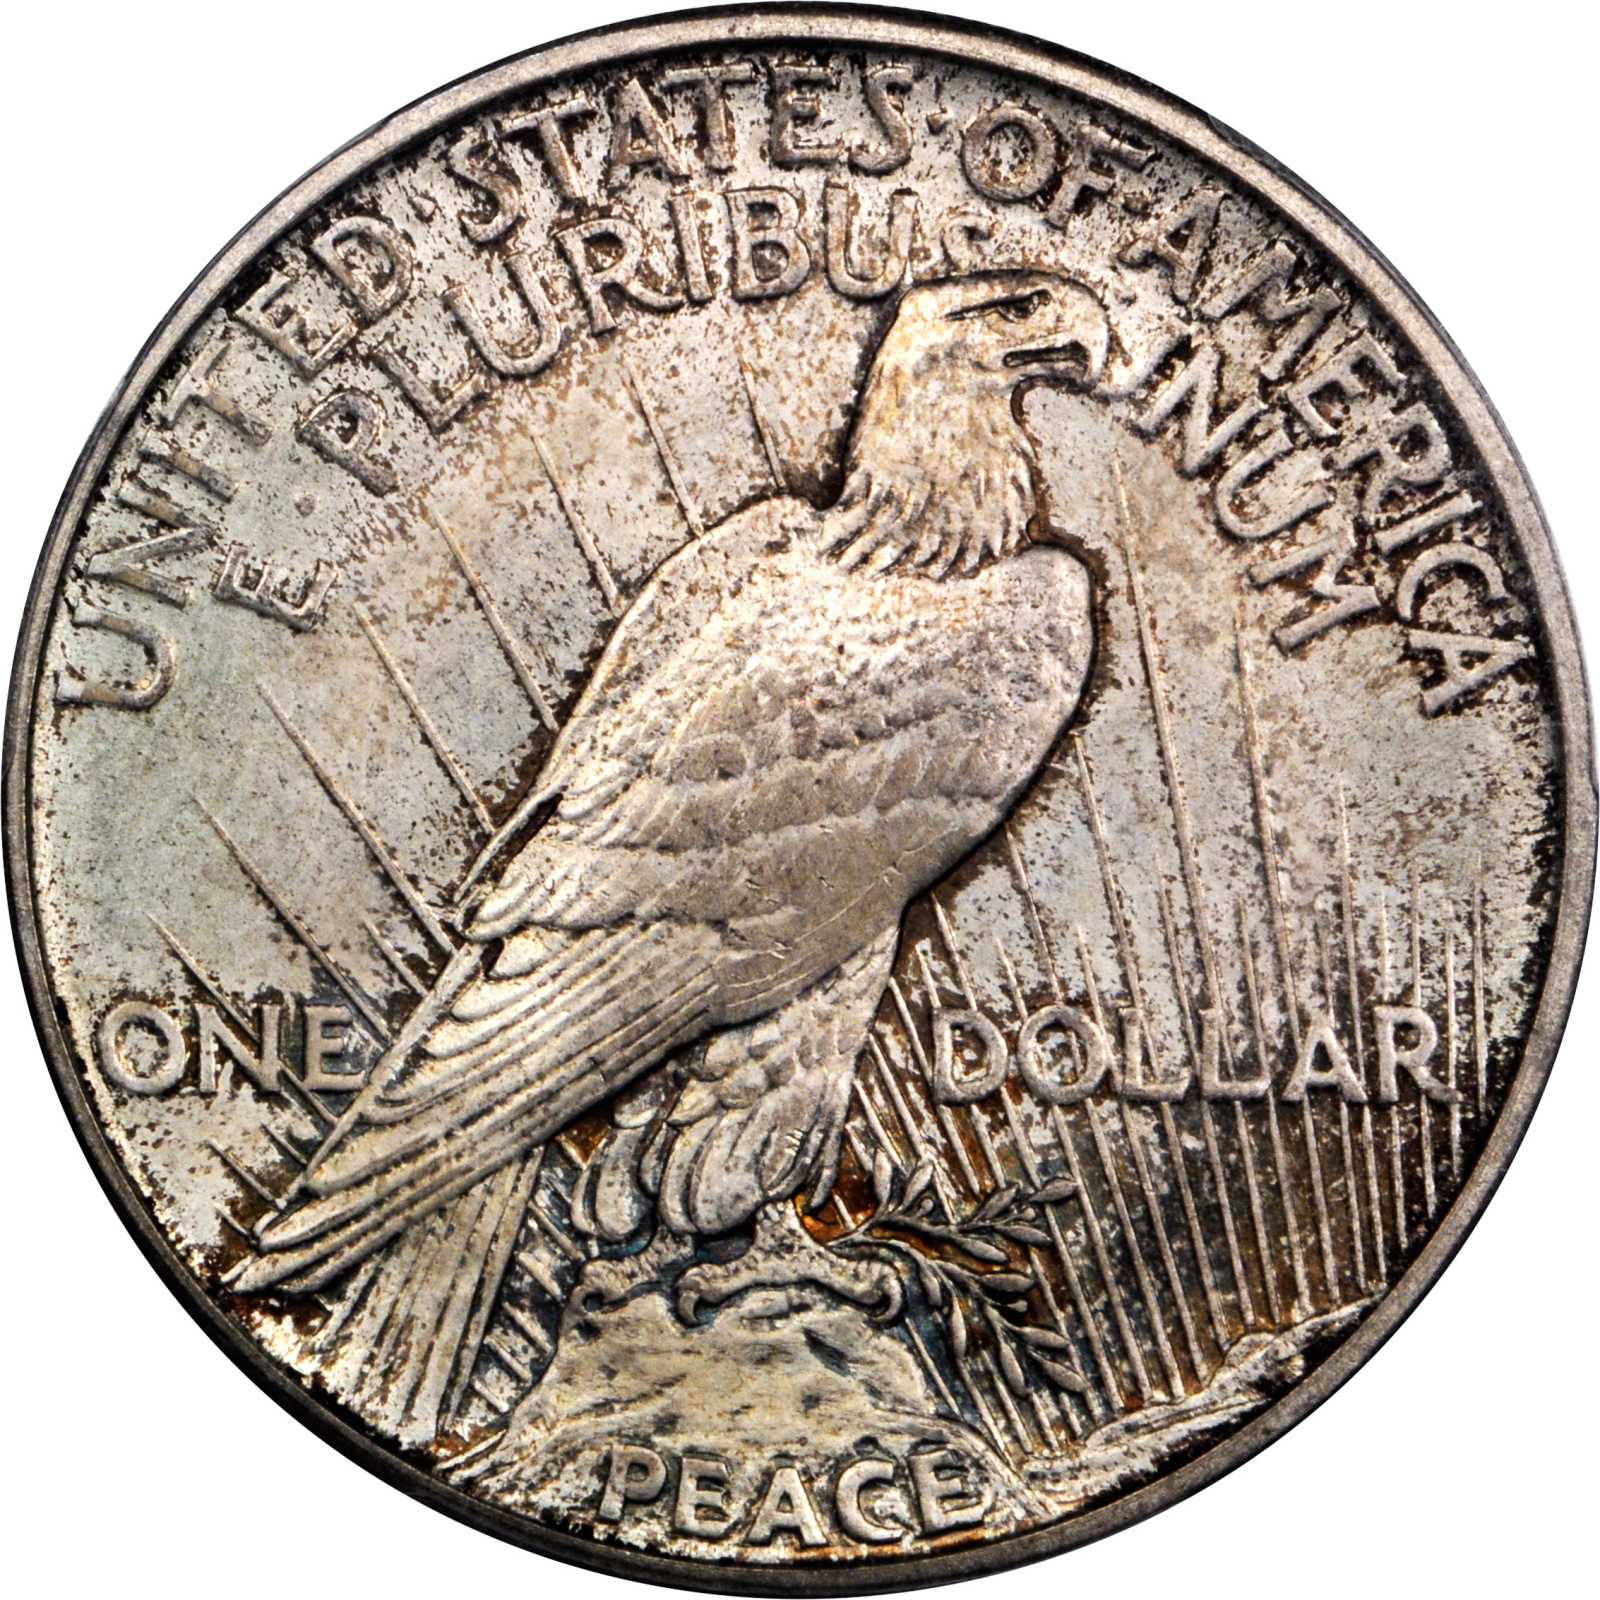 Value Of 1922 Proof Peace Dollar Rare Peace Dollar Buyer,Shortbread